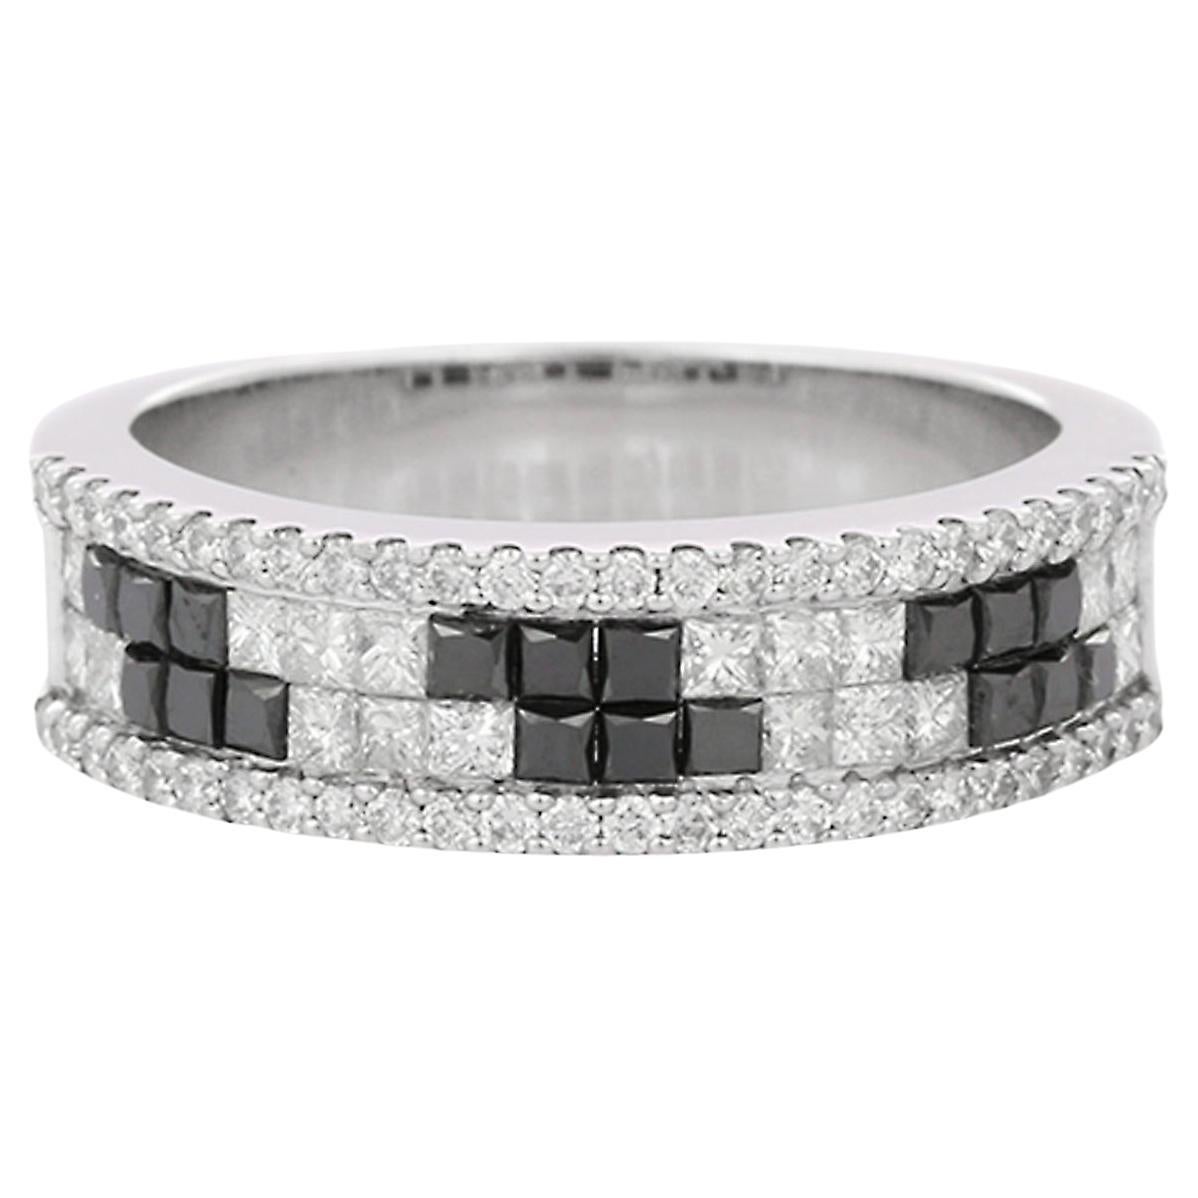 For Sale:  Unisex Black White Diamond Engagement Band Ring Gift for Him in 18k White Gold